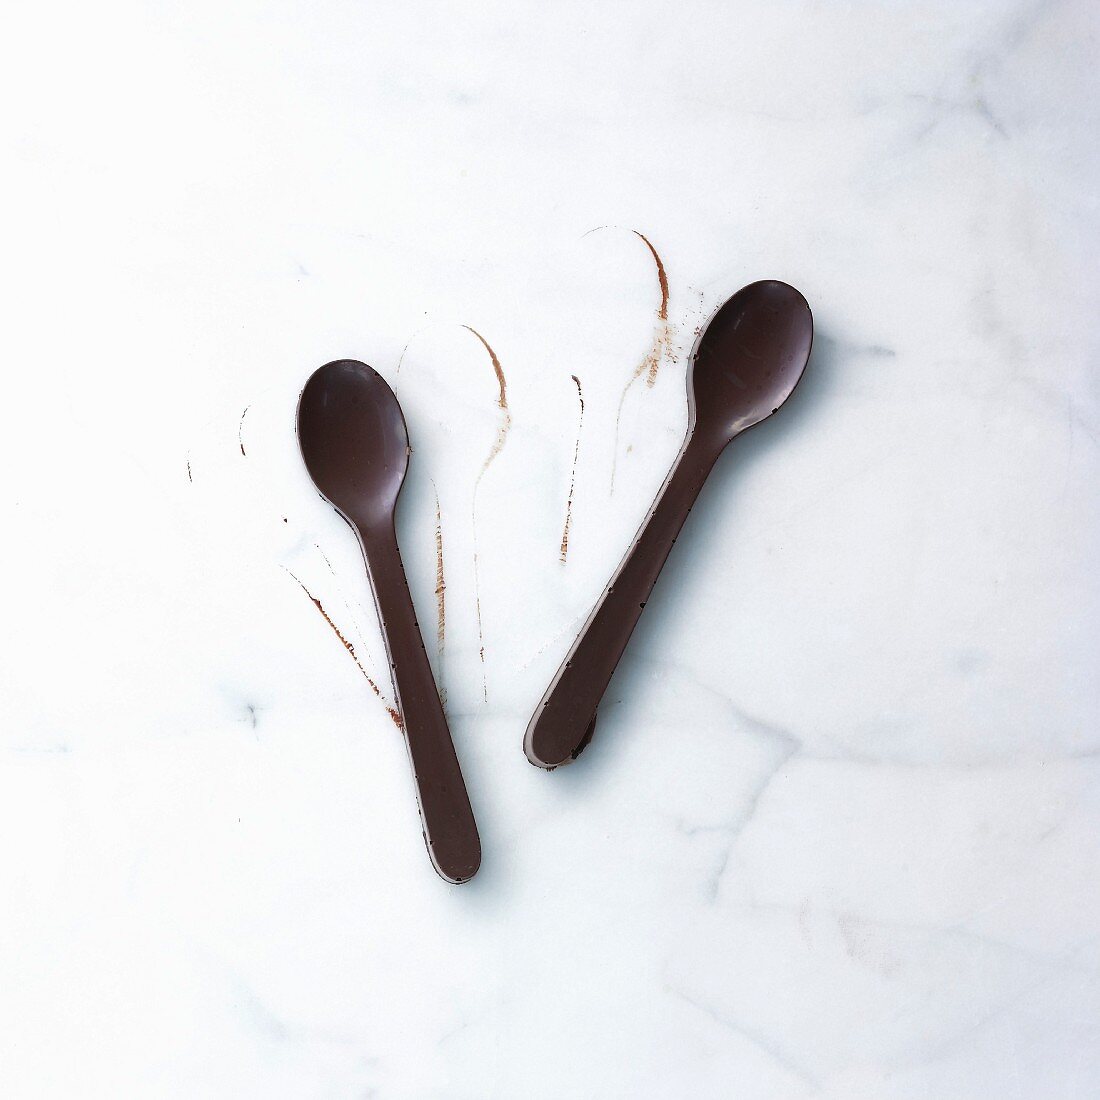 Chocolate spoons